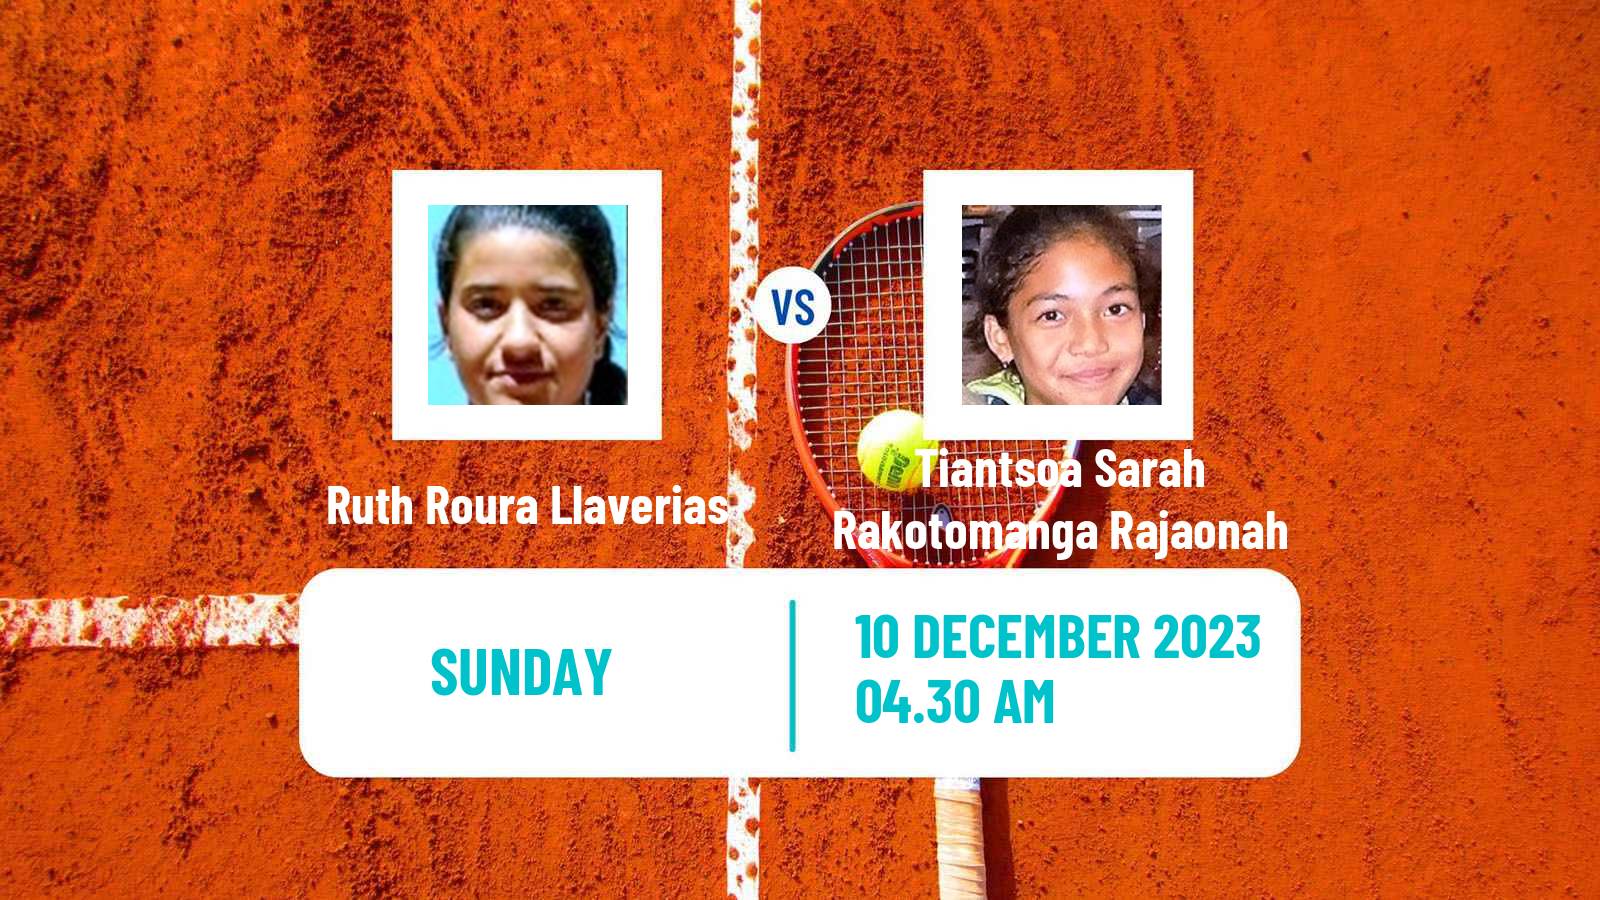 Tennis ITF W15 Valencia 2 Women Ruth Roura Llaverias - Tiantsoa Sarah Rakotomanga Rajaonah